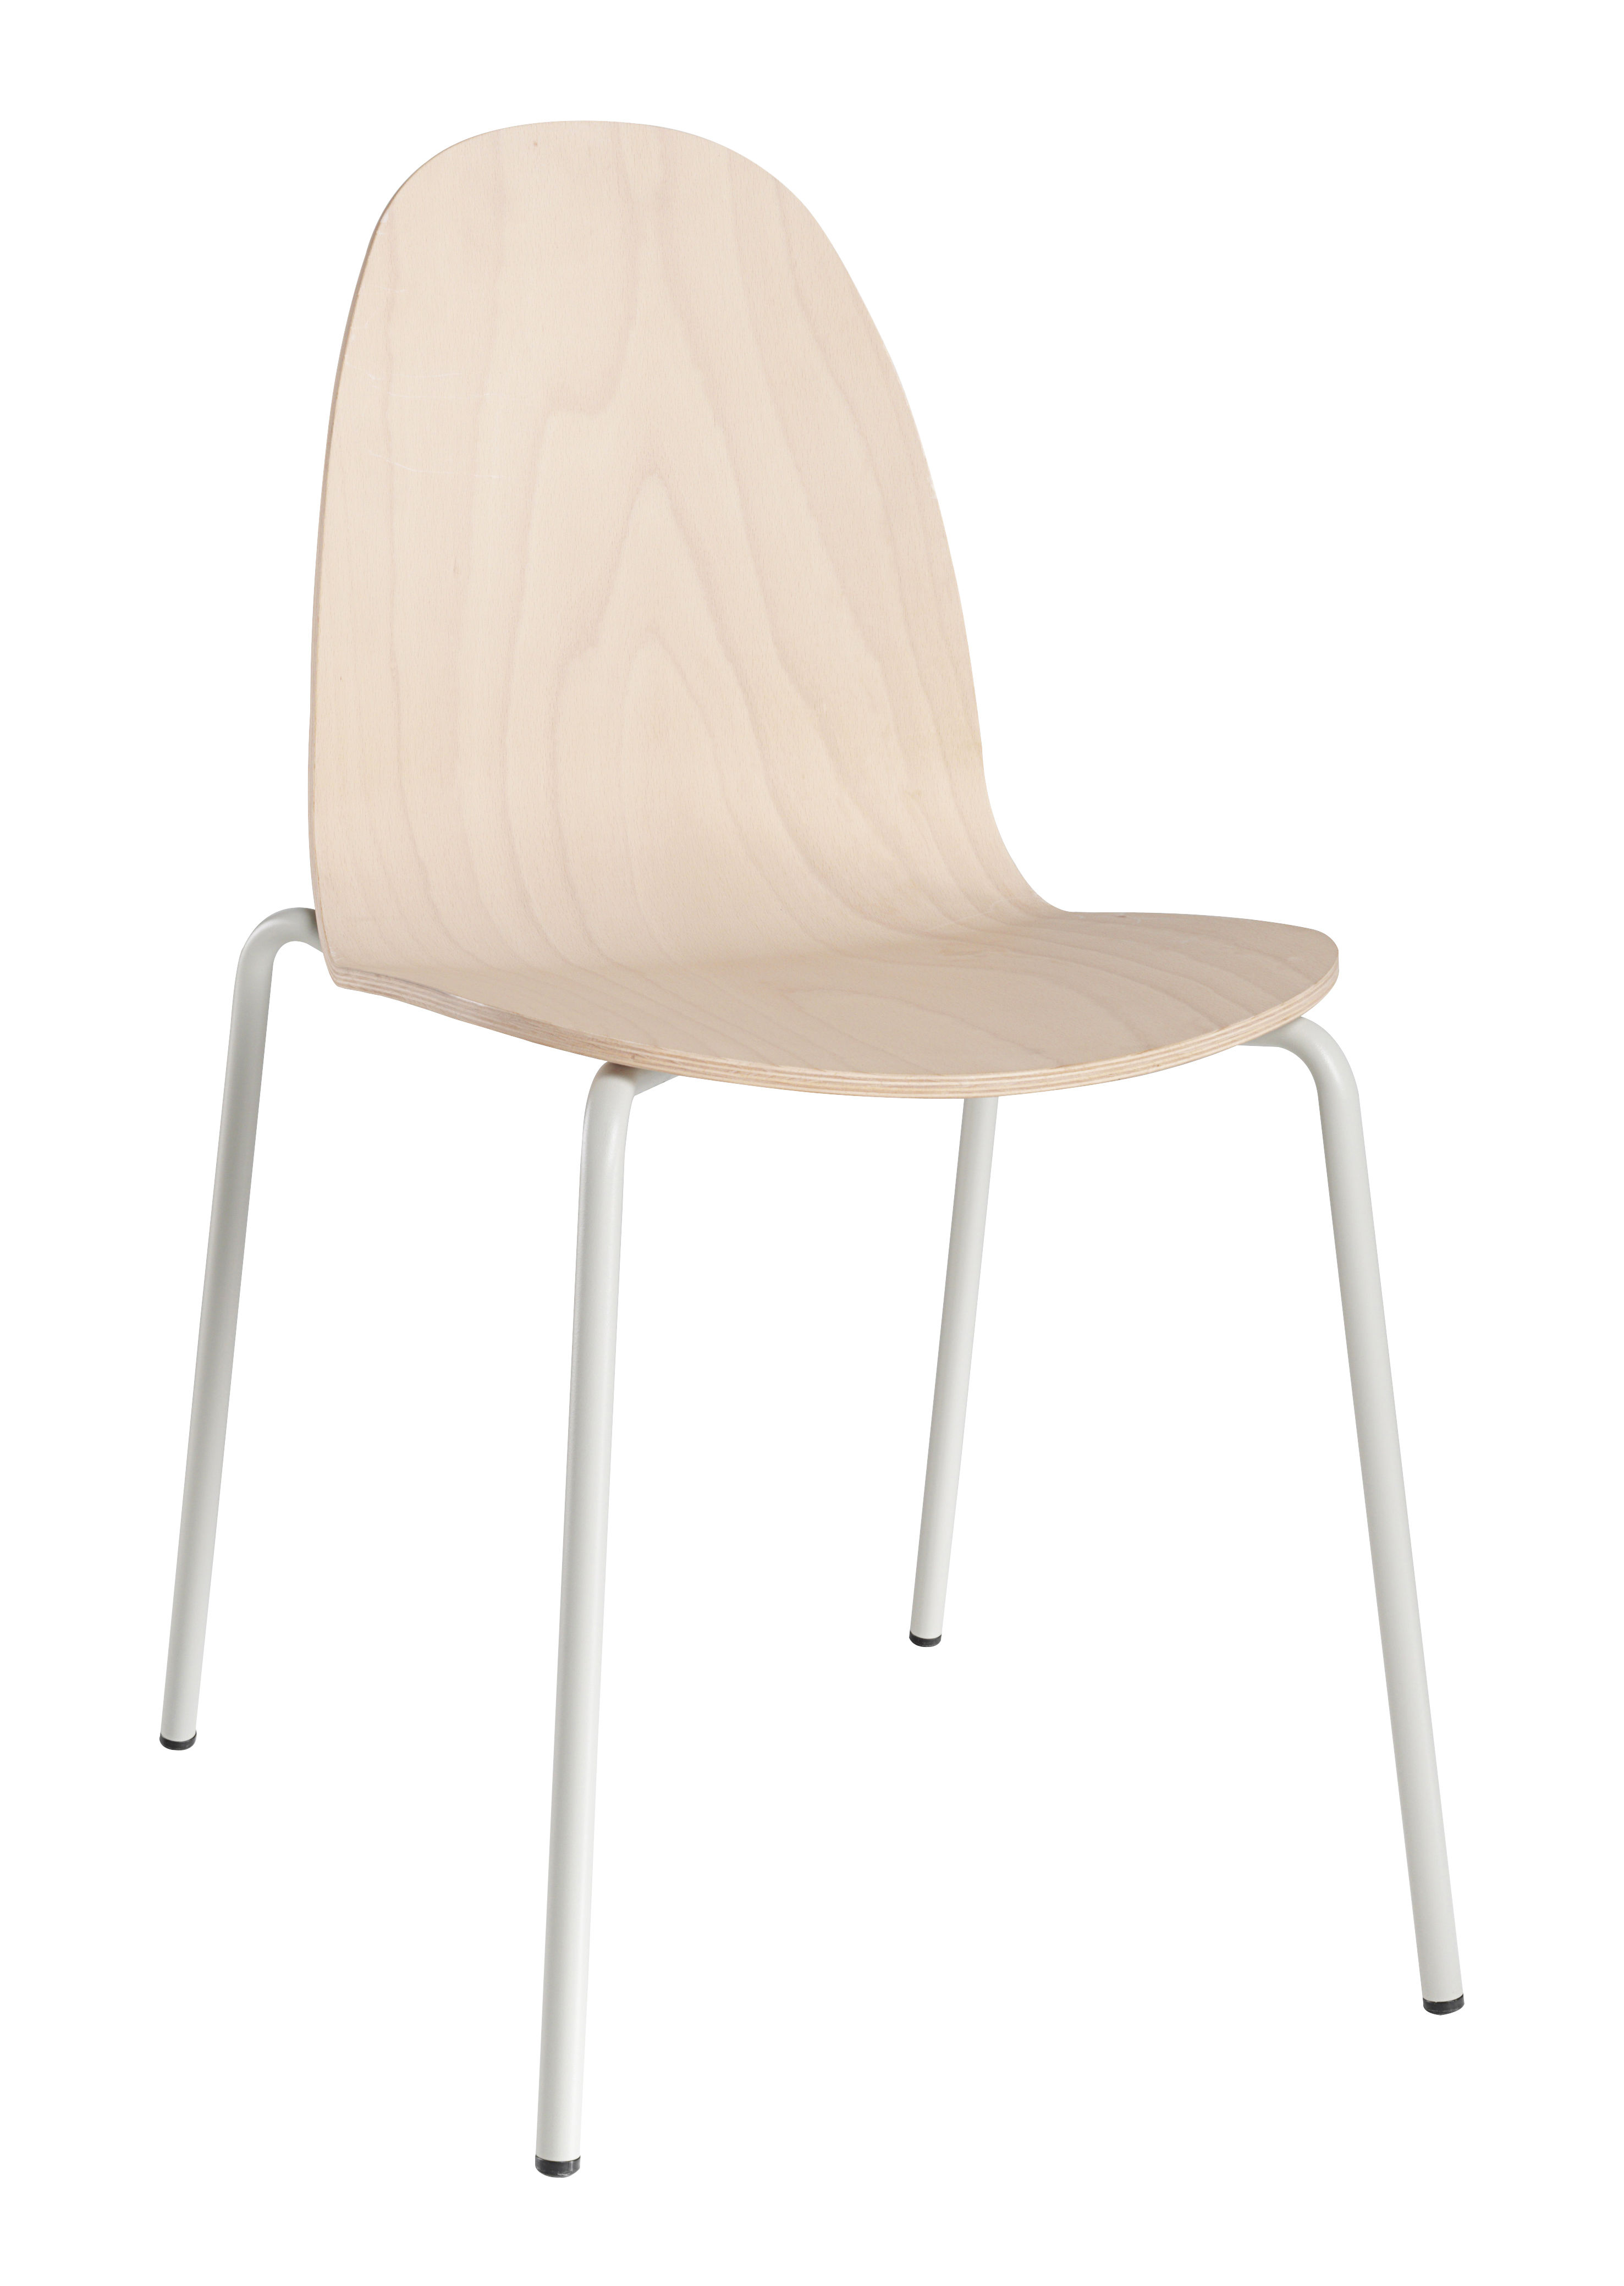 Chaise empilable Bob / Bois & Métal - Ondarreta blanc/beige en métal/bois